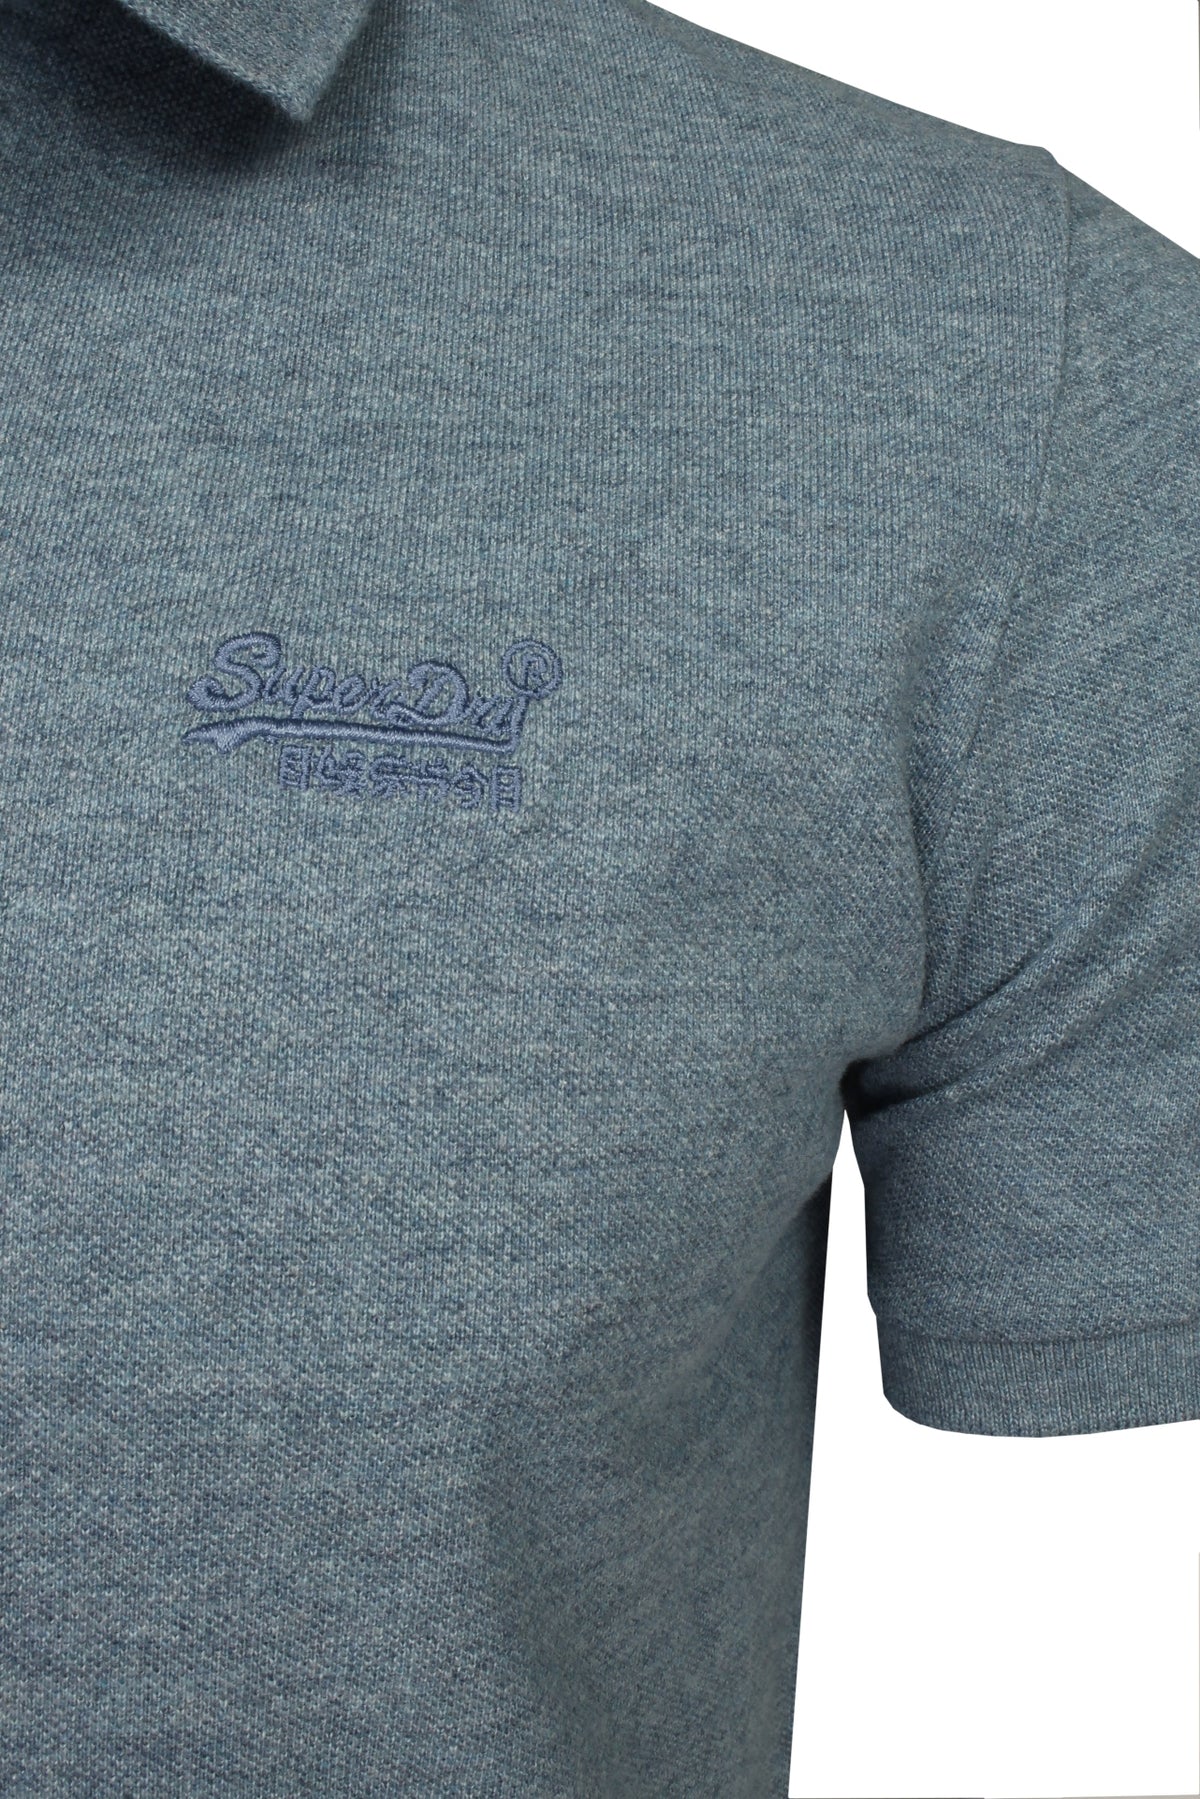 Superdry Polo Shirt 'Classic Pique Polo' Short Sleeve, 02, M1110247A, Desert Sky Blue Grit